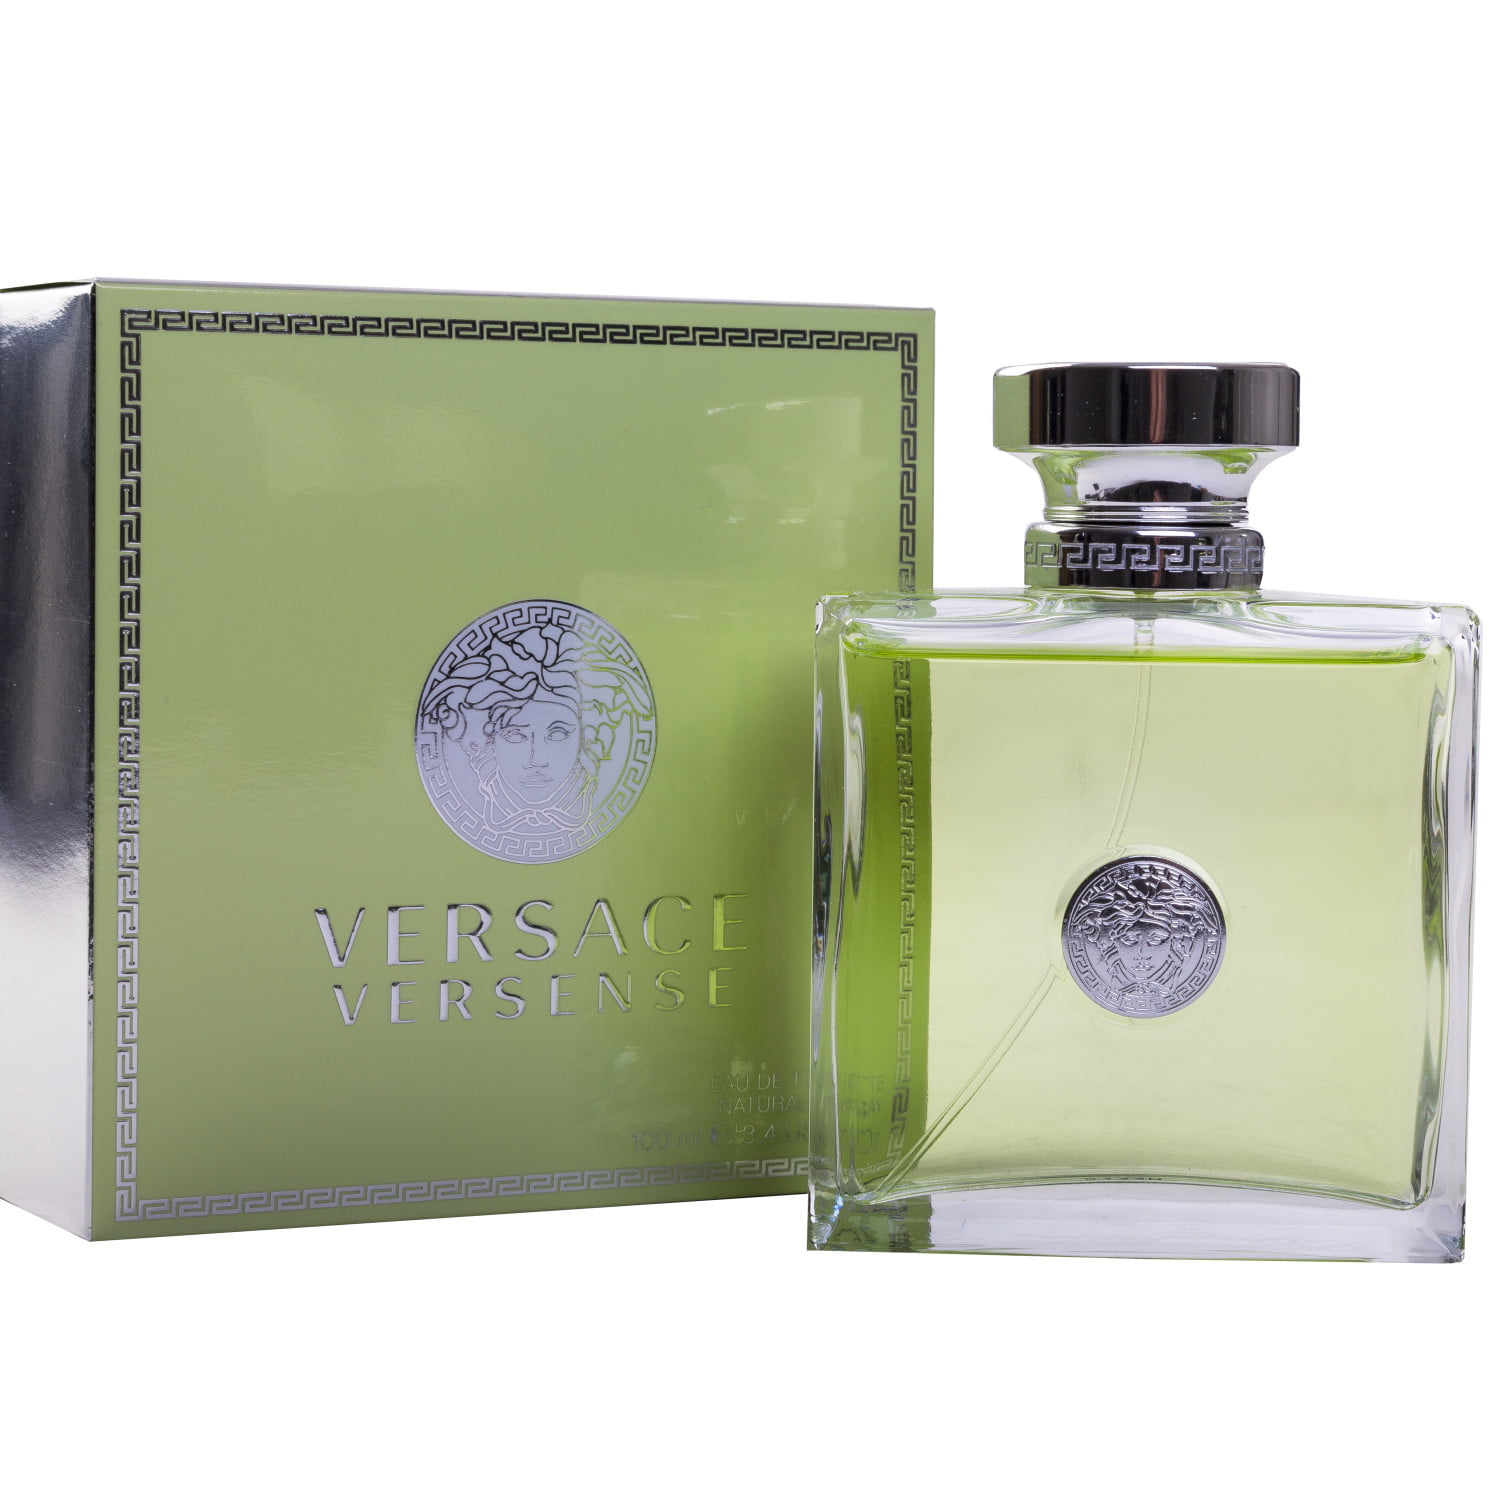 versace perfume green box